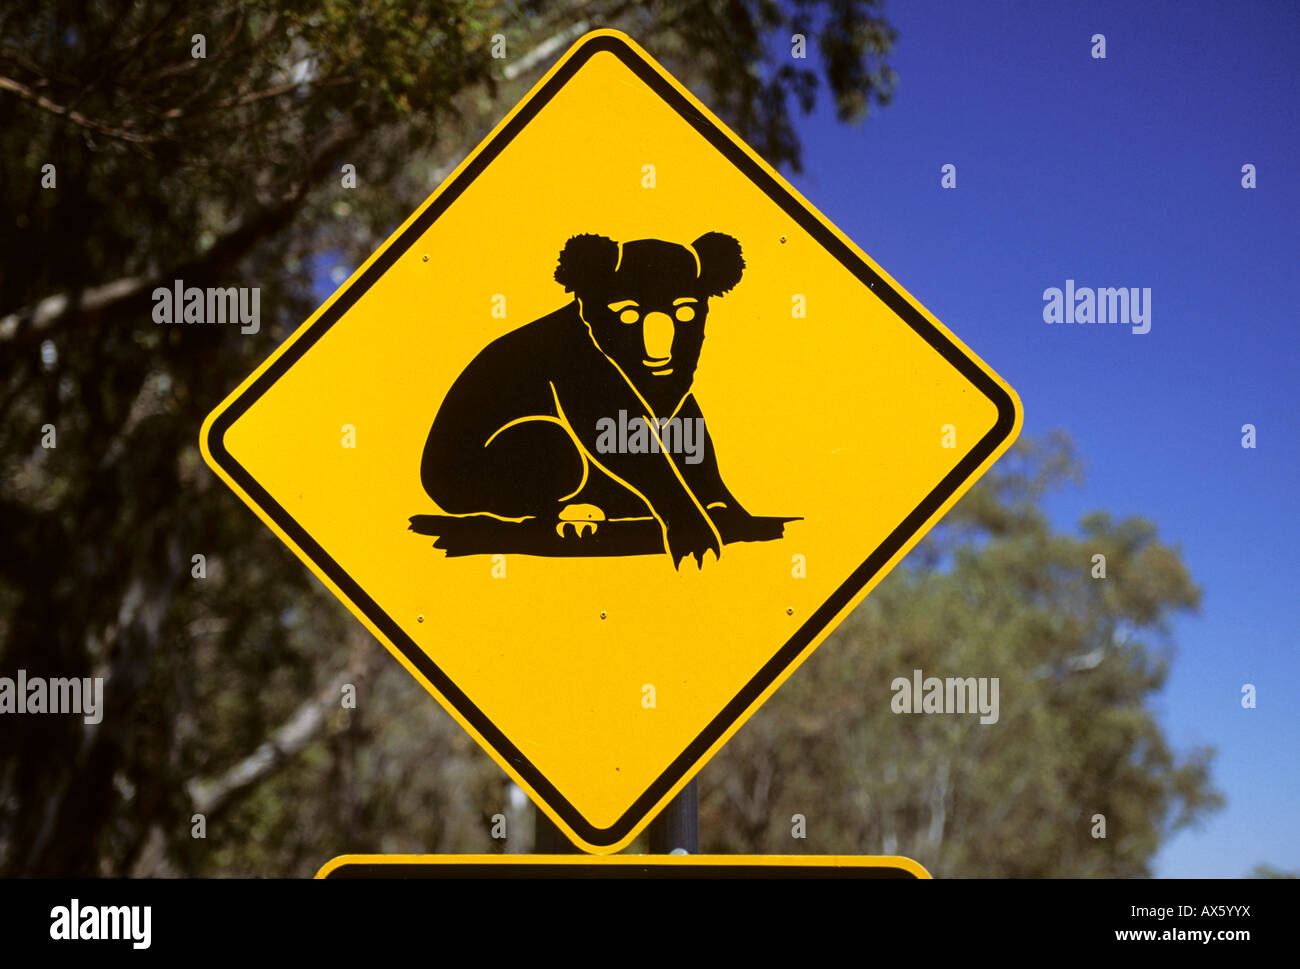 Koala crossing sign, Queensland, Australie Banque D'Images